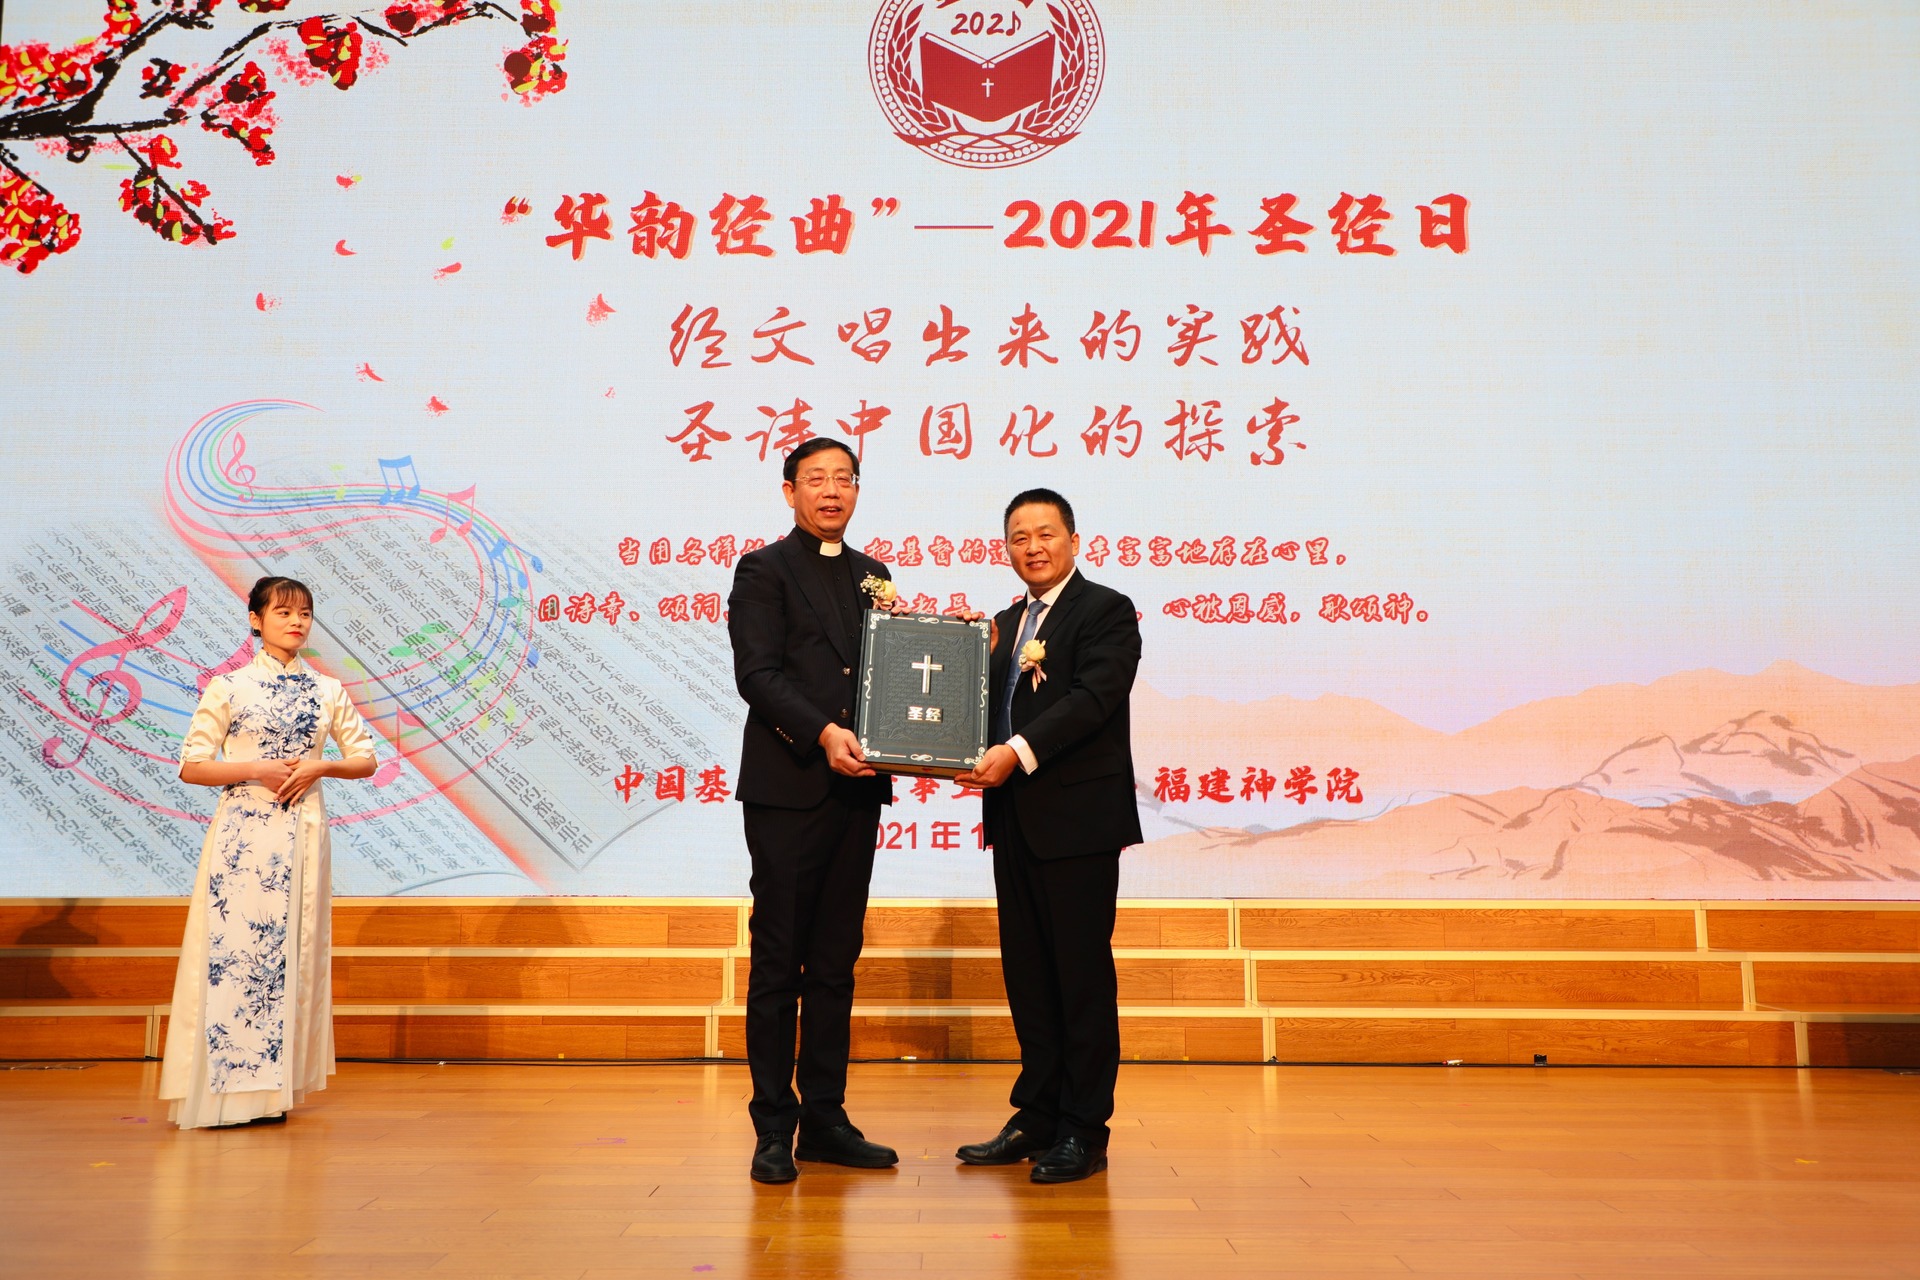 Bible Day 2021 Celebrated in Fujian Theological Seminary